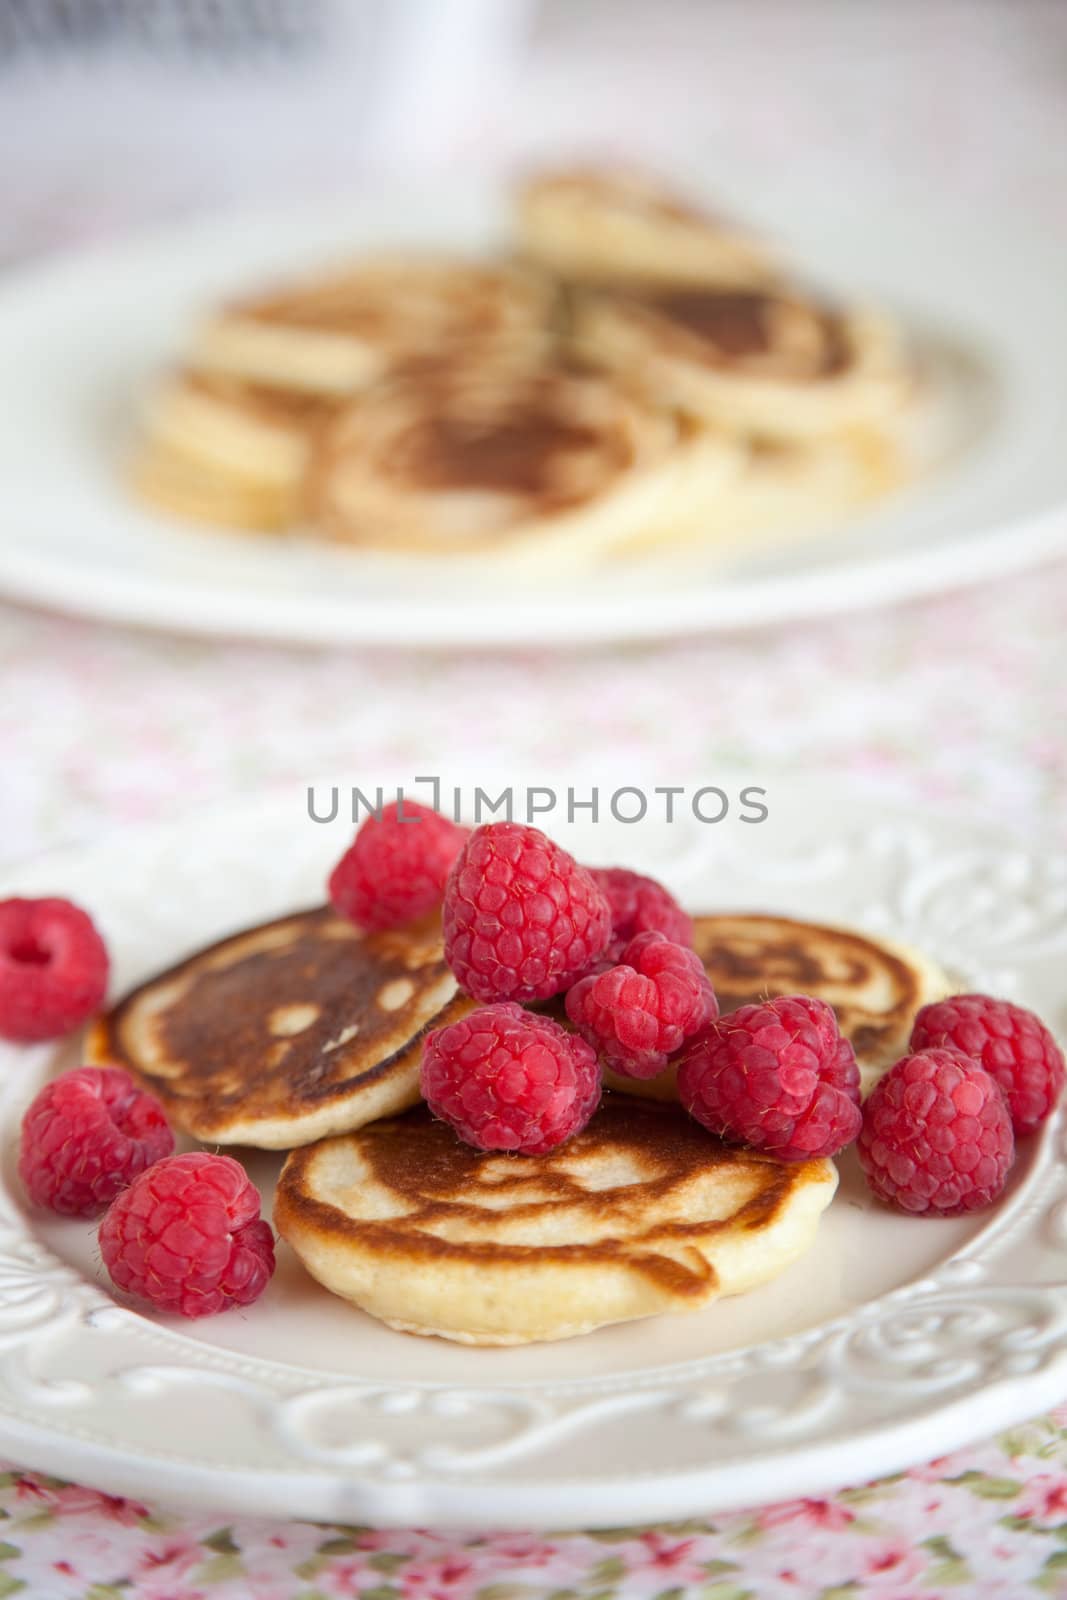 Raspberry pancakes by Fotosmurf